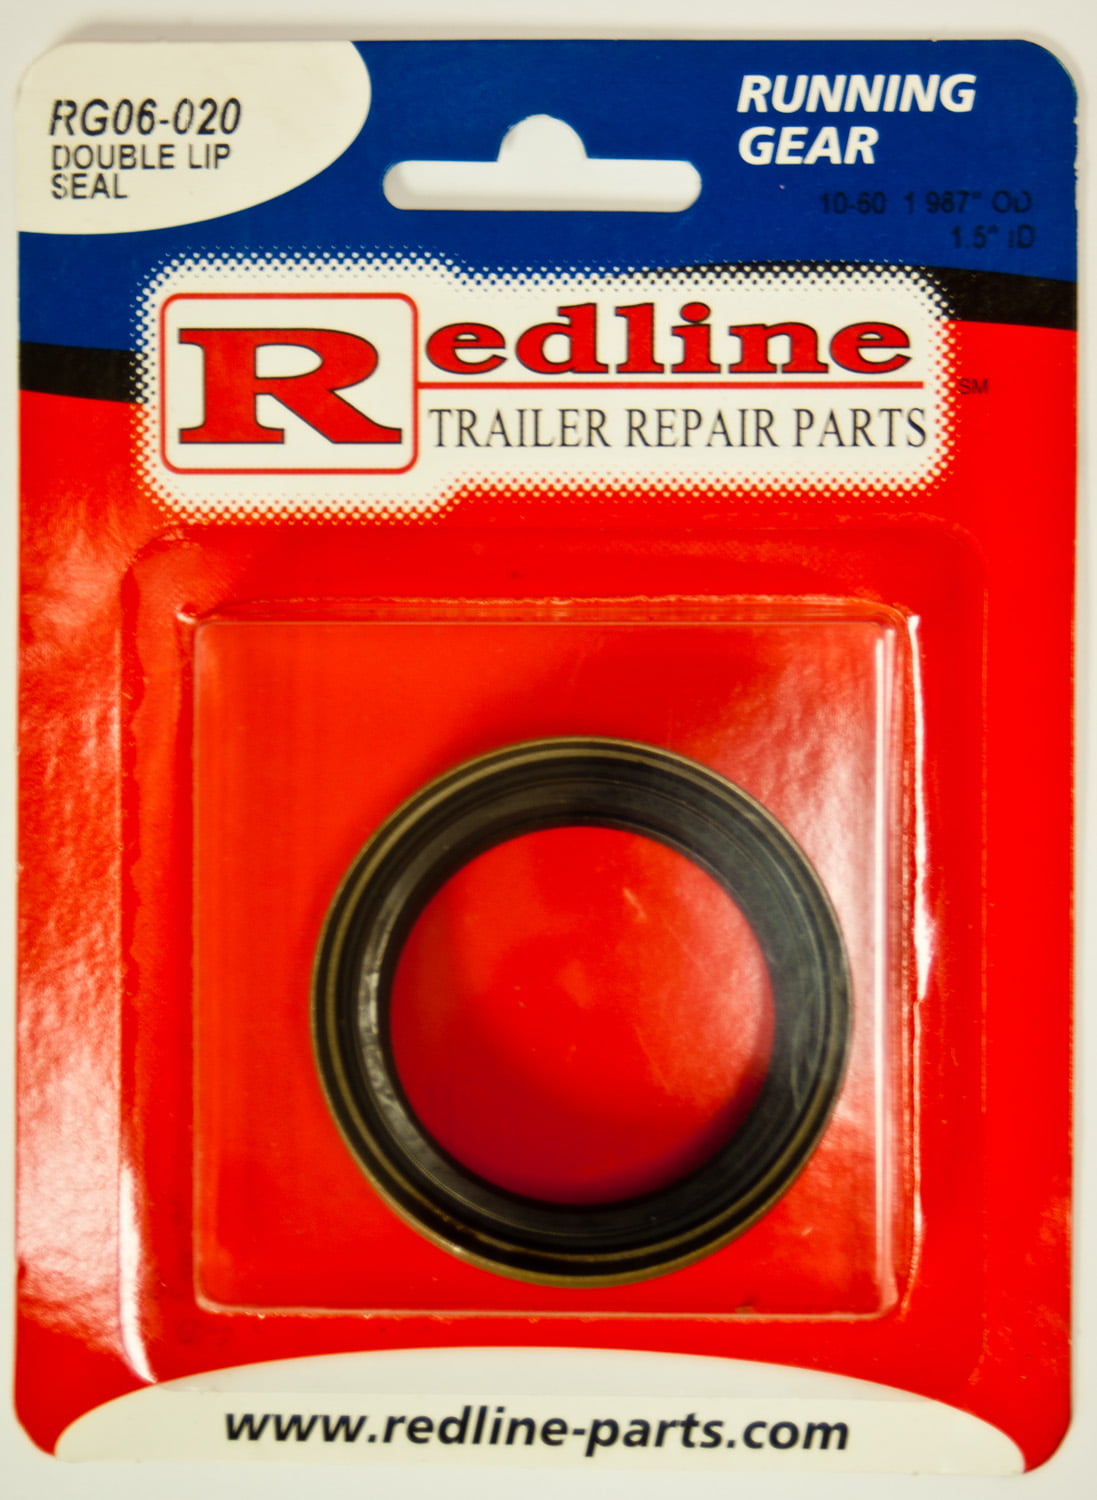 Redline RG06-020 Double Lip Trailer Seals 10-60 1.987